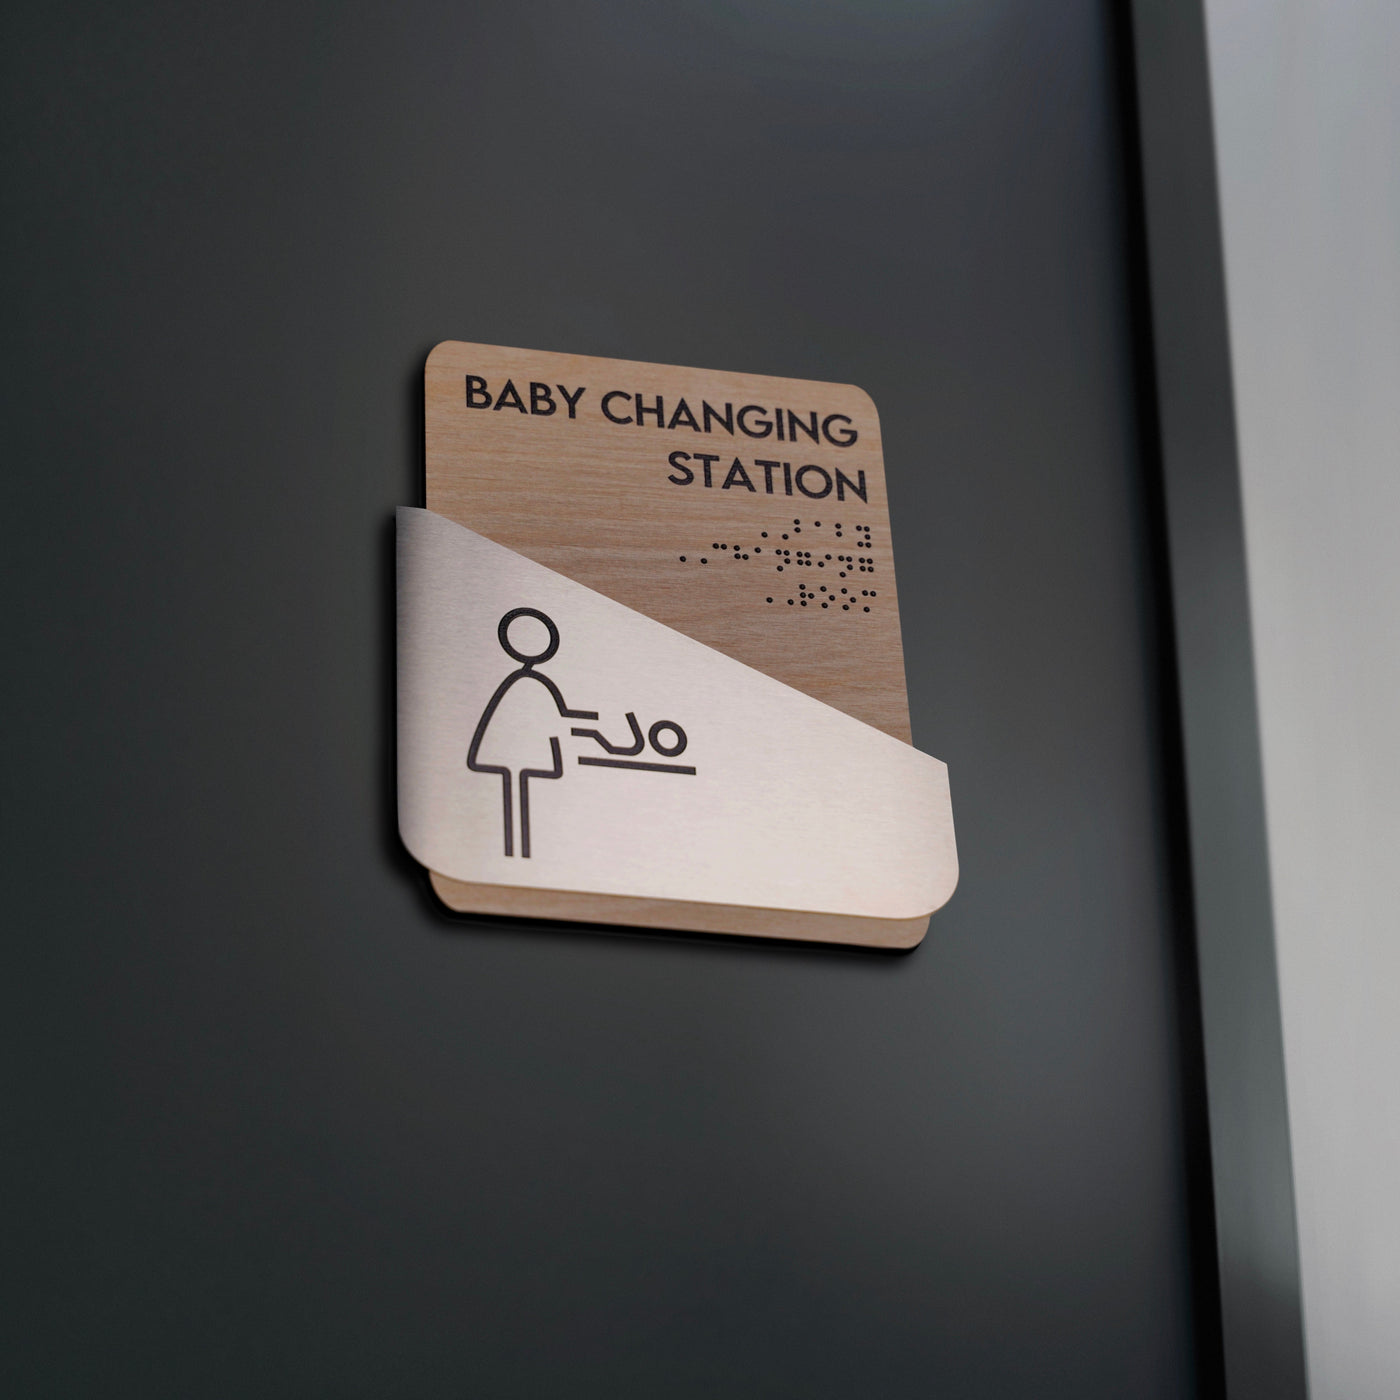 Bathroom Signs - Steel All Gender Bathrooms Signs "Downhill" Design